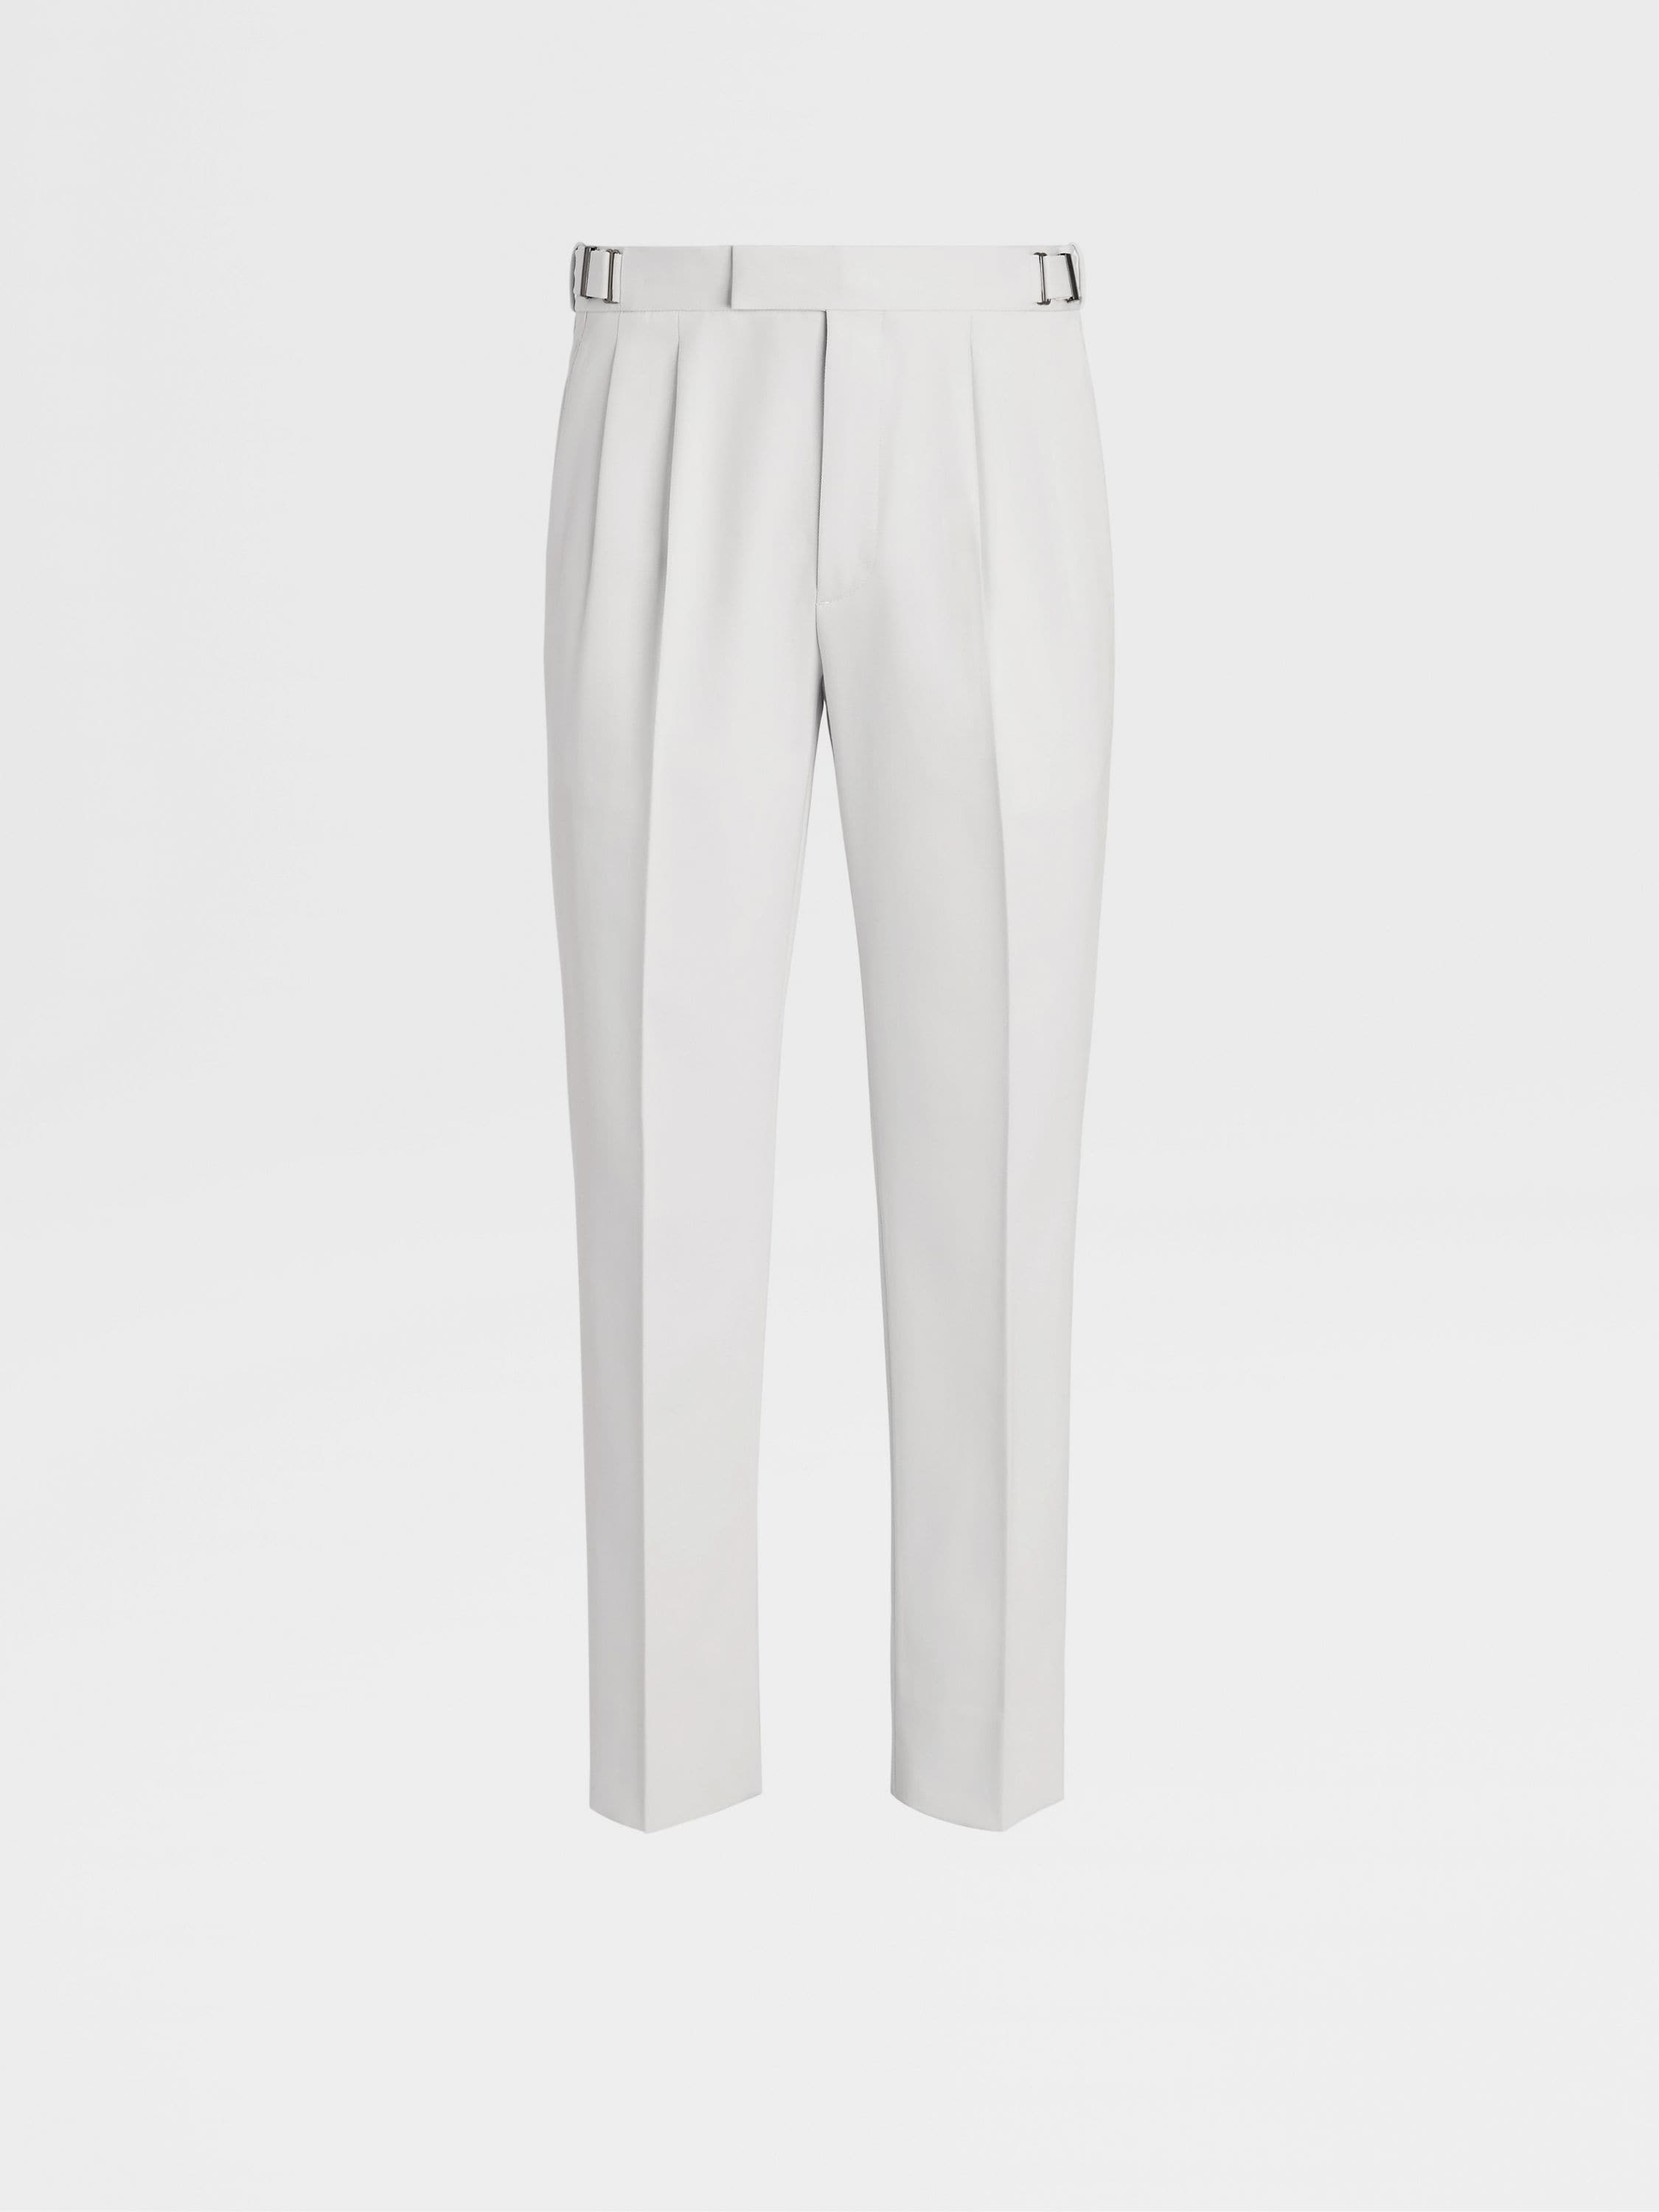 Safari White Cotton Linen Heritage Trousers